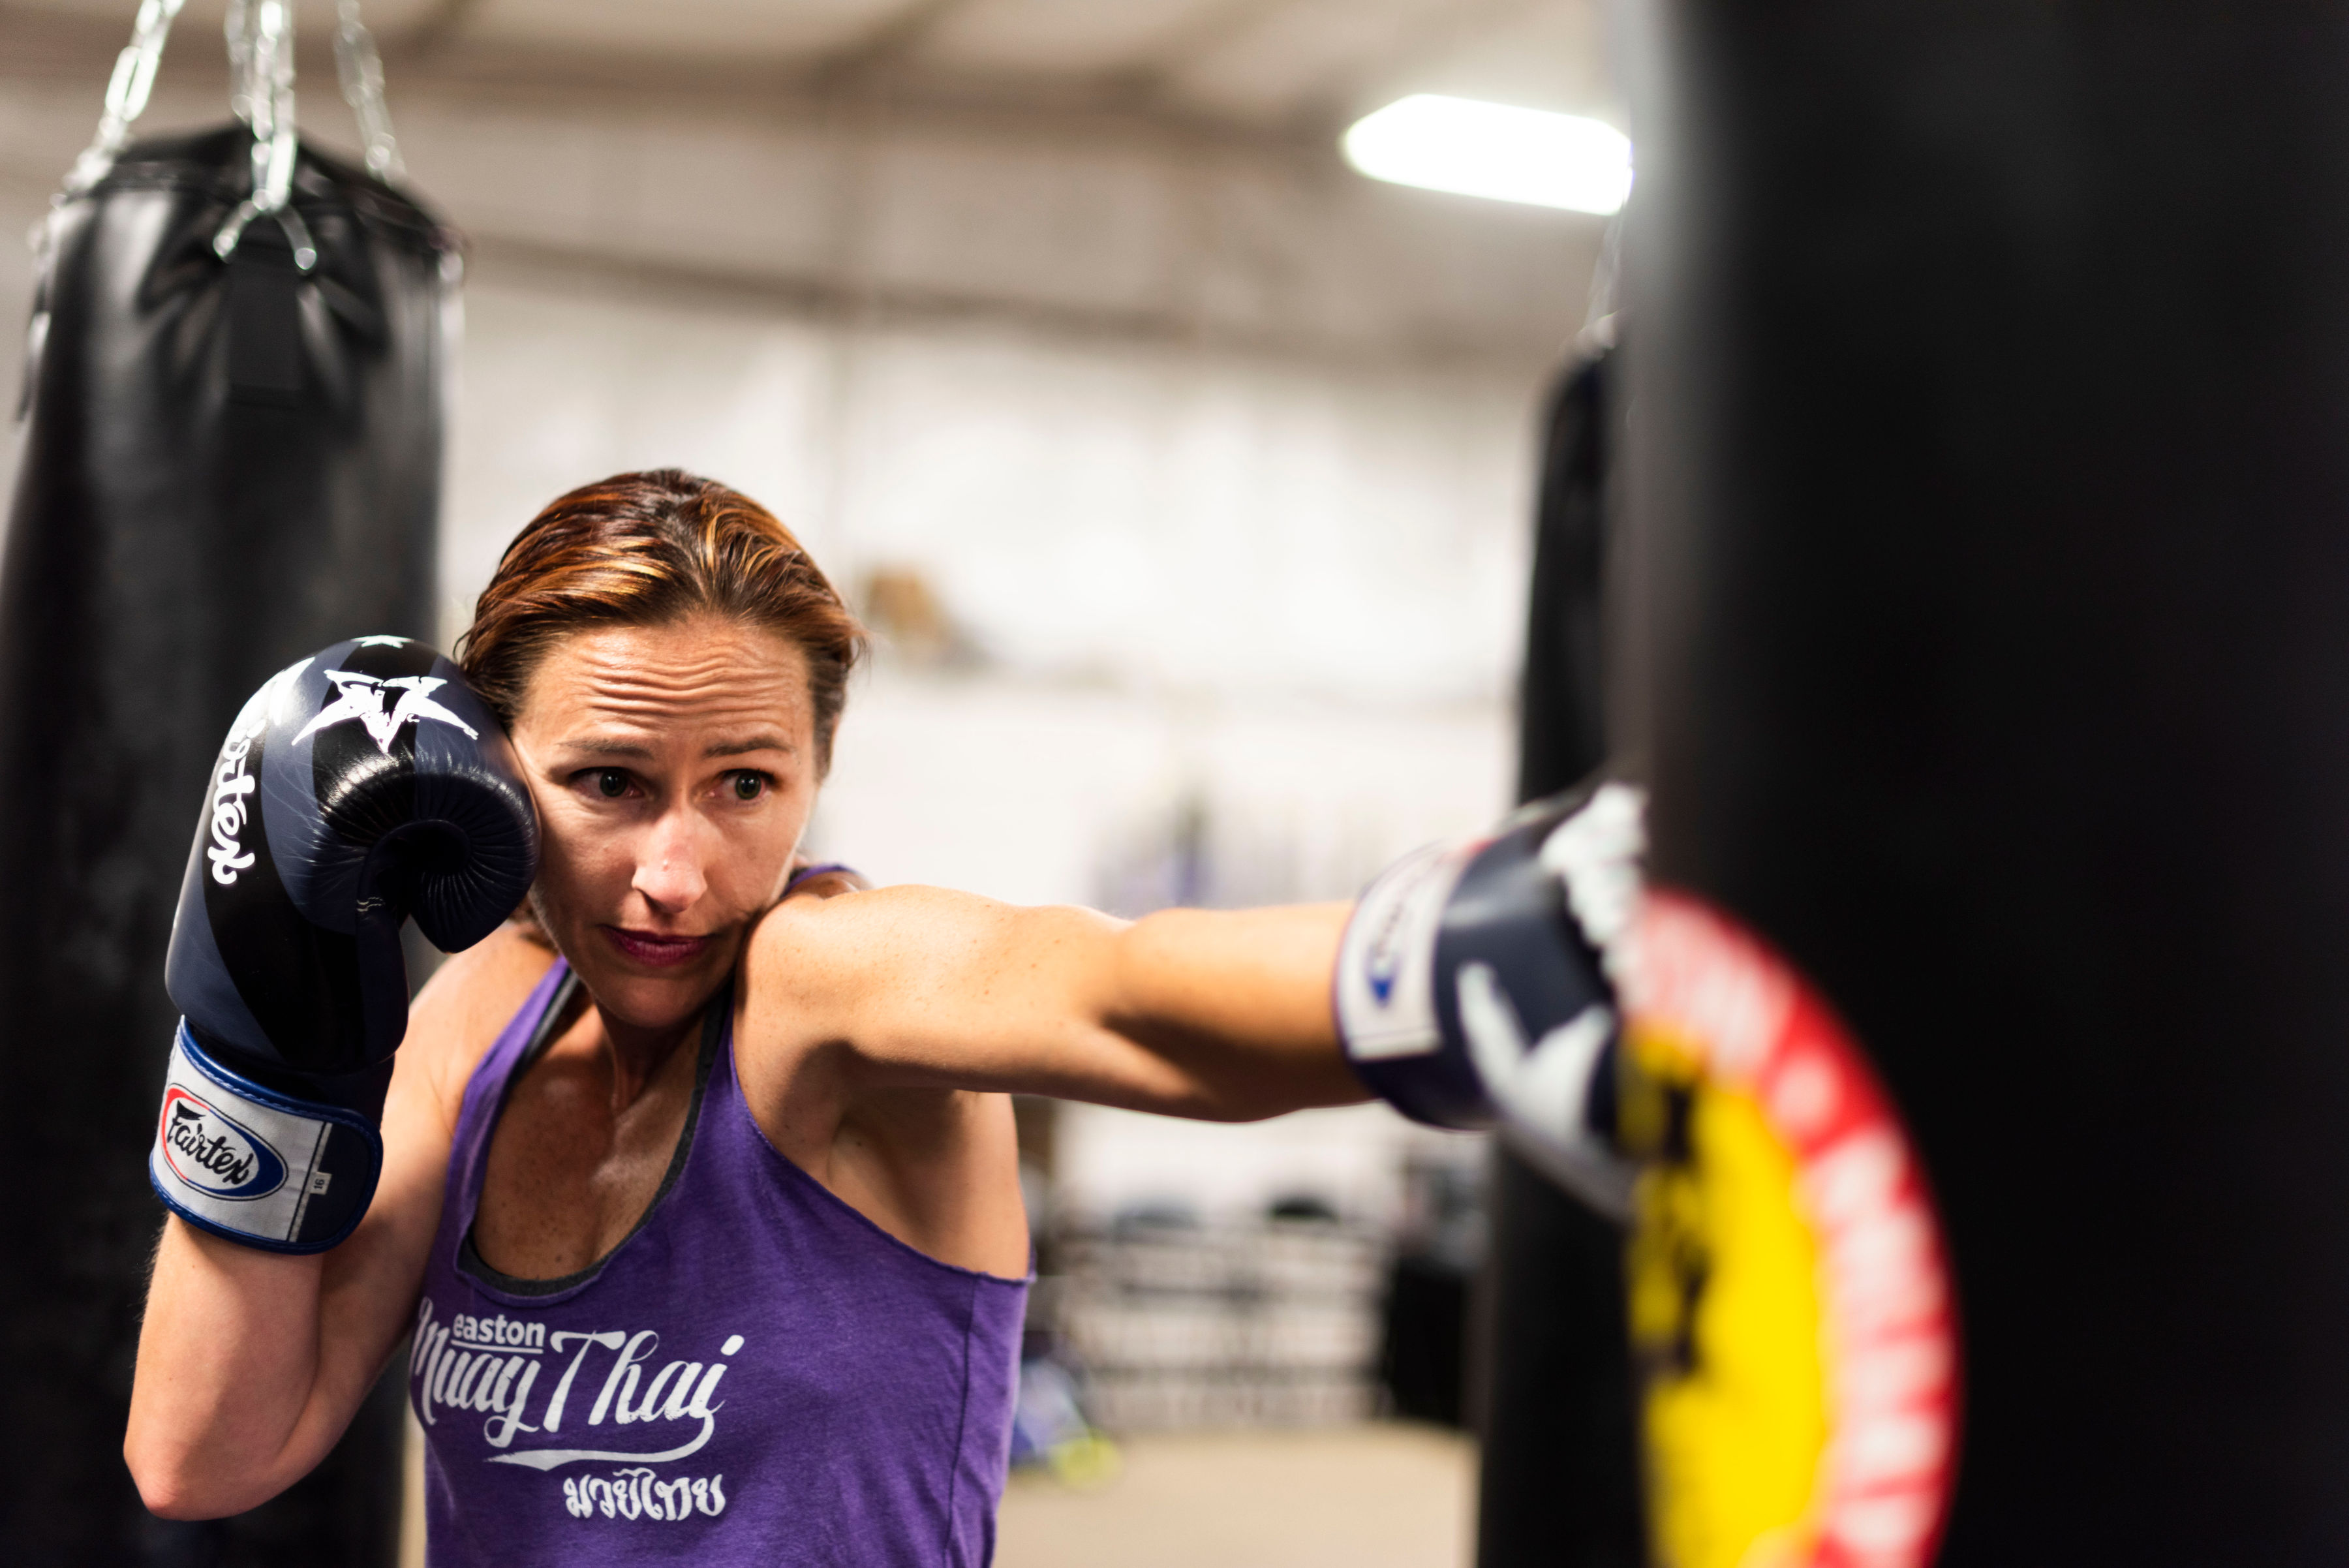 A woman punching a kickboxing heavy bag